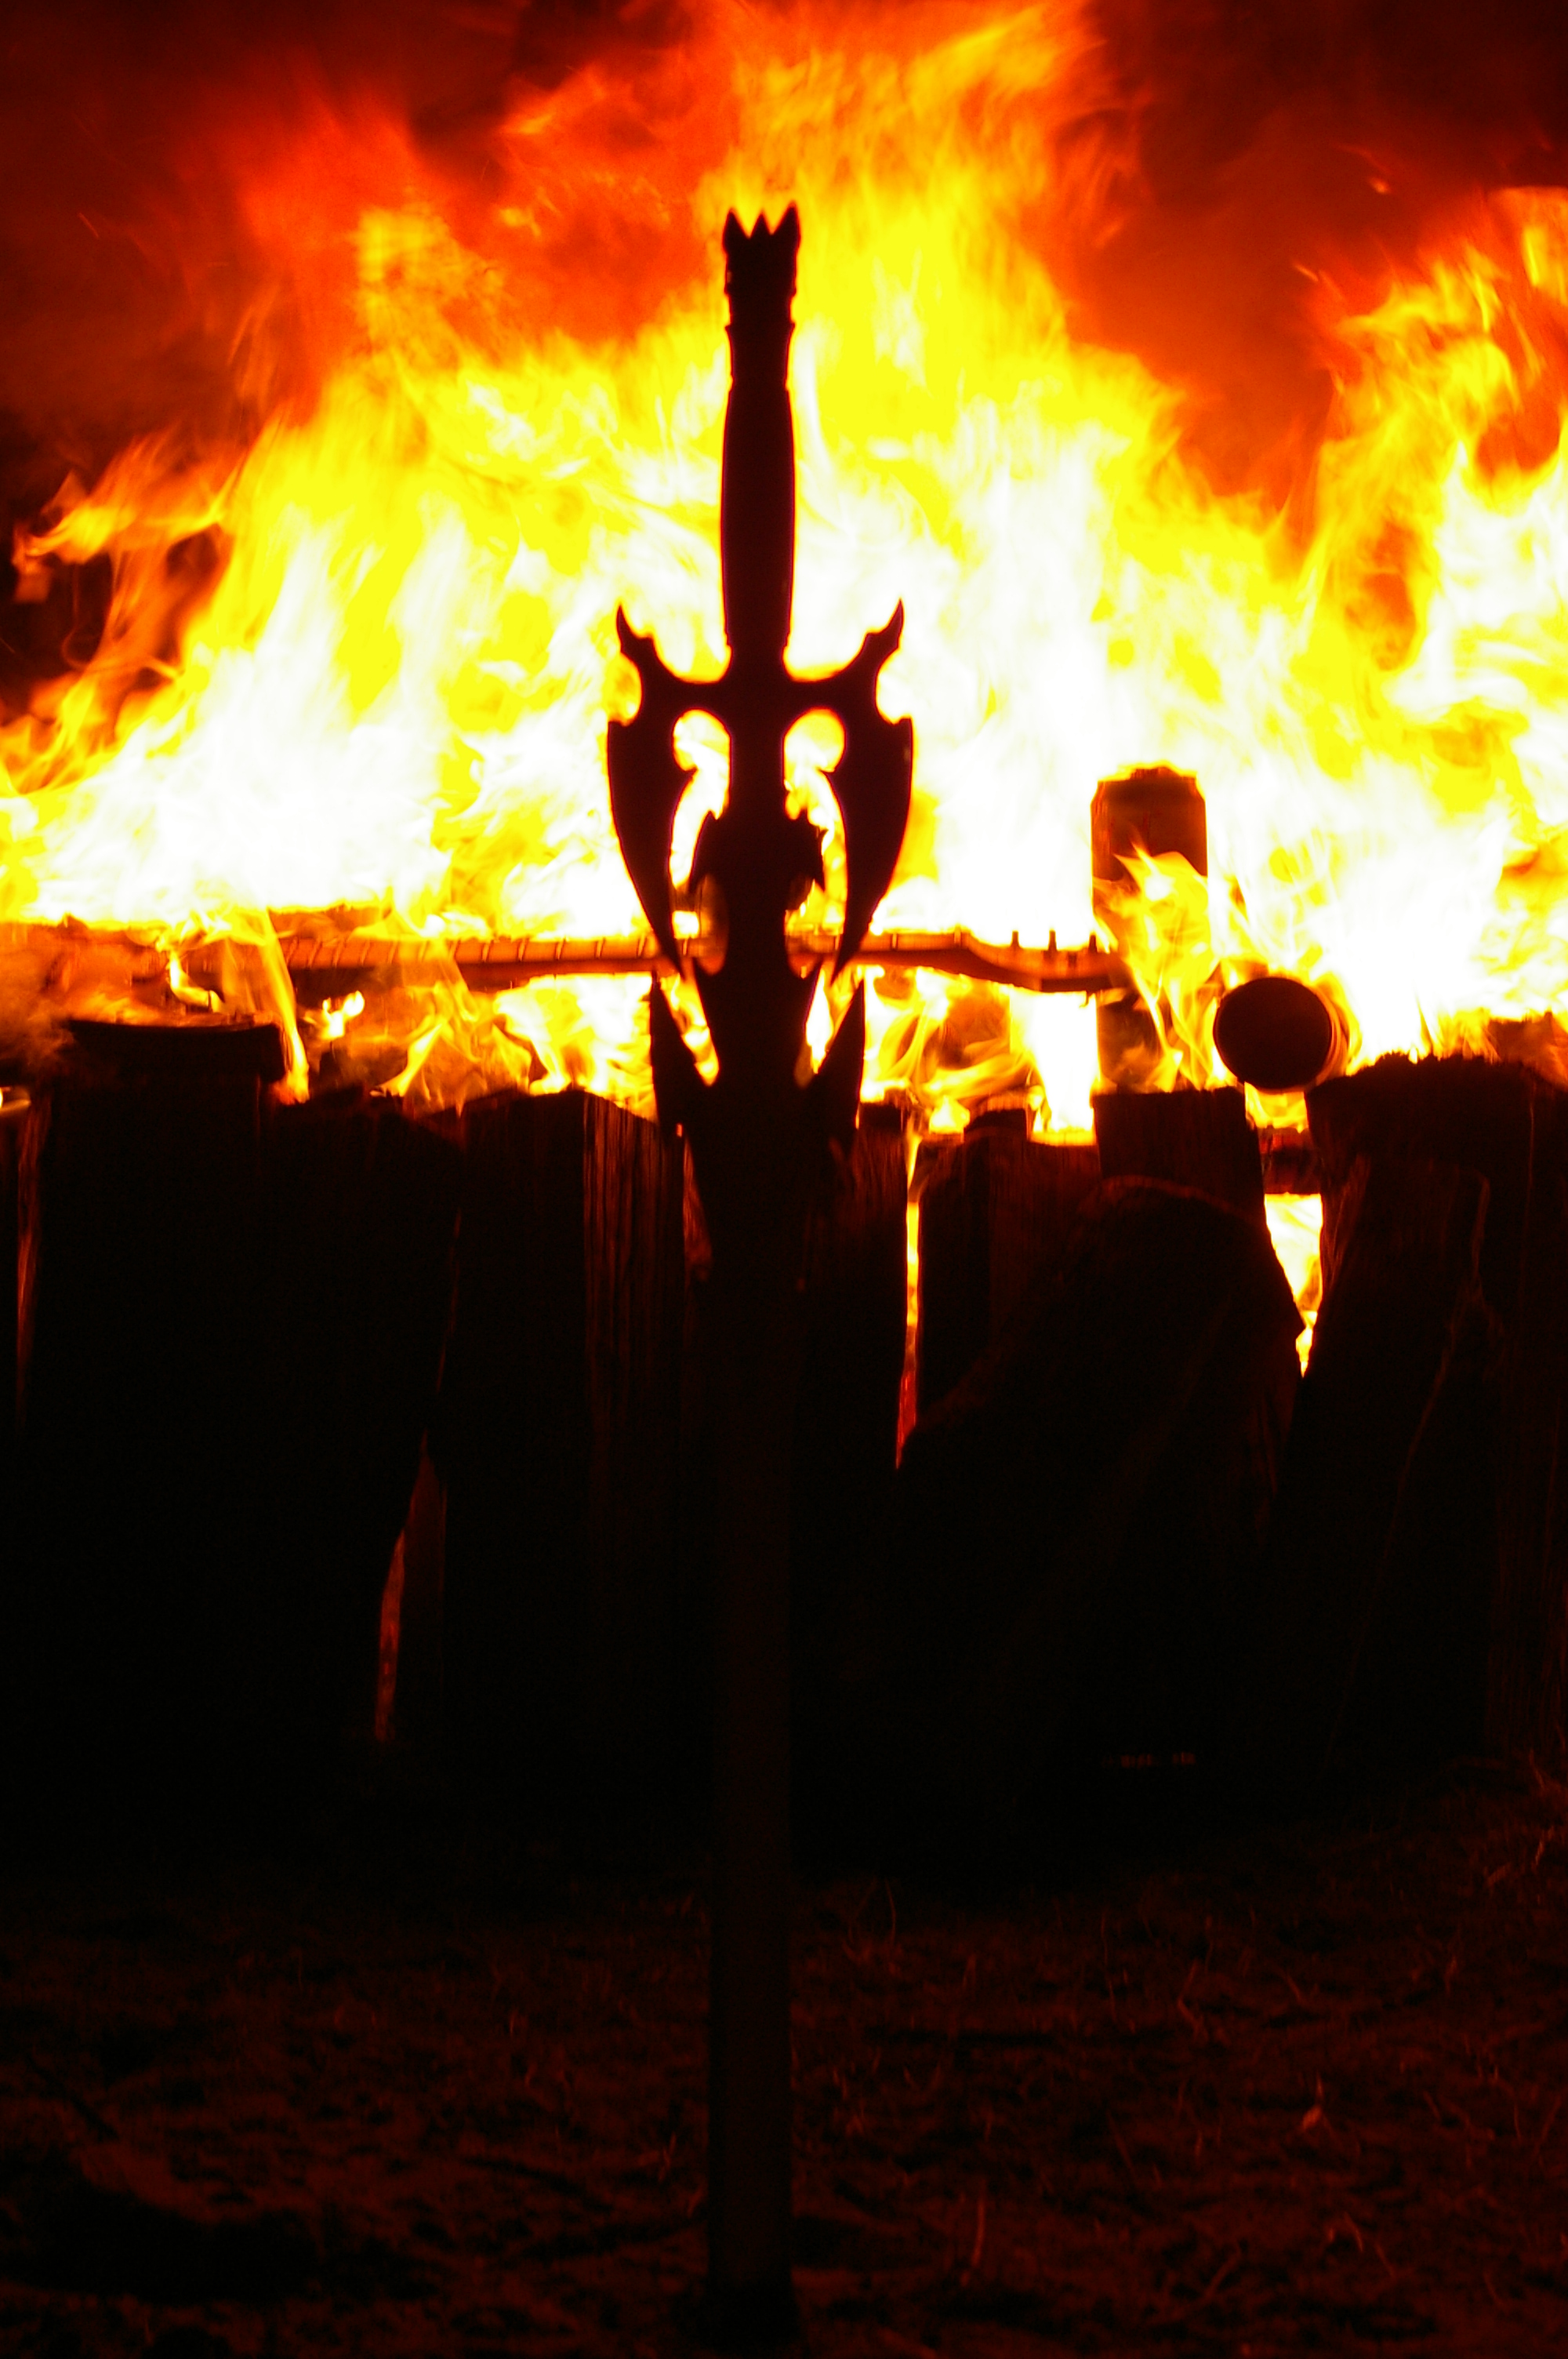 Flaming pyre and Joe's sword